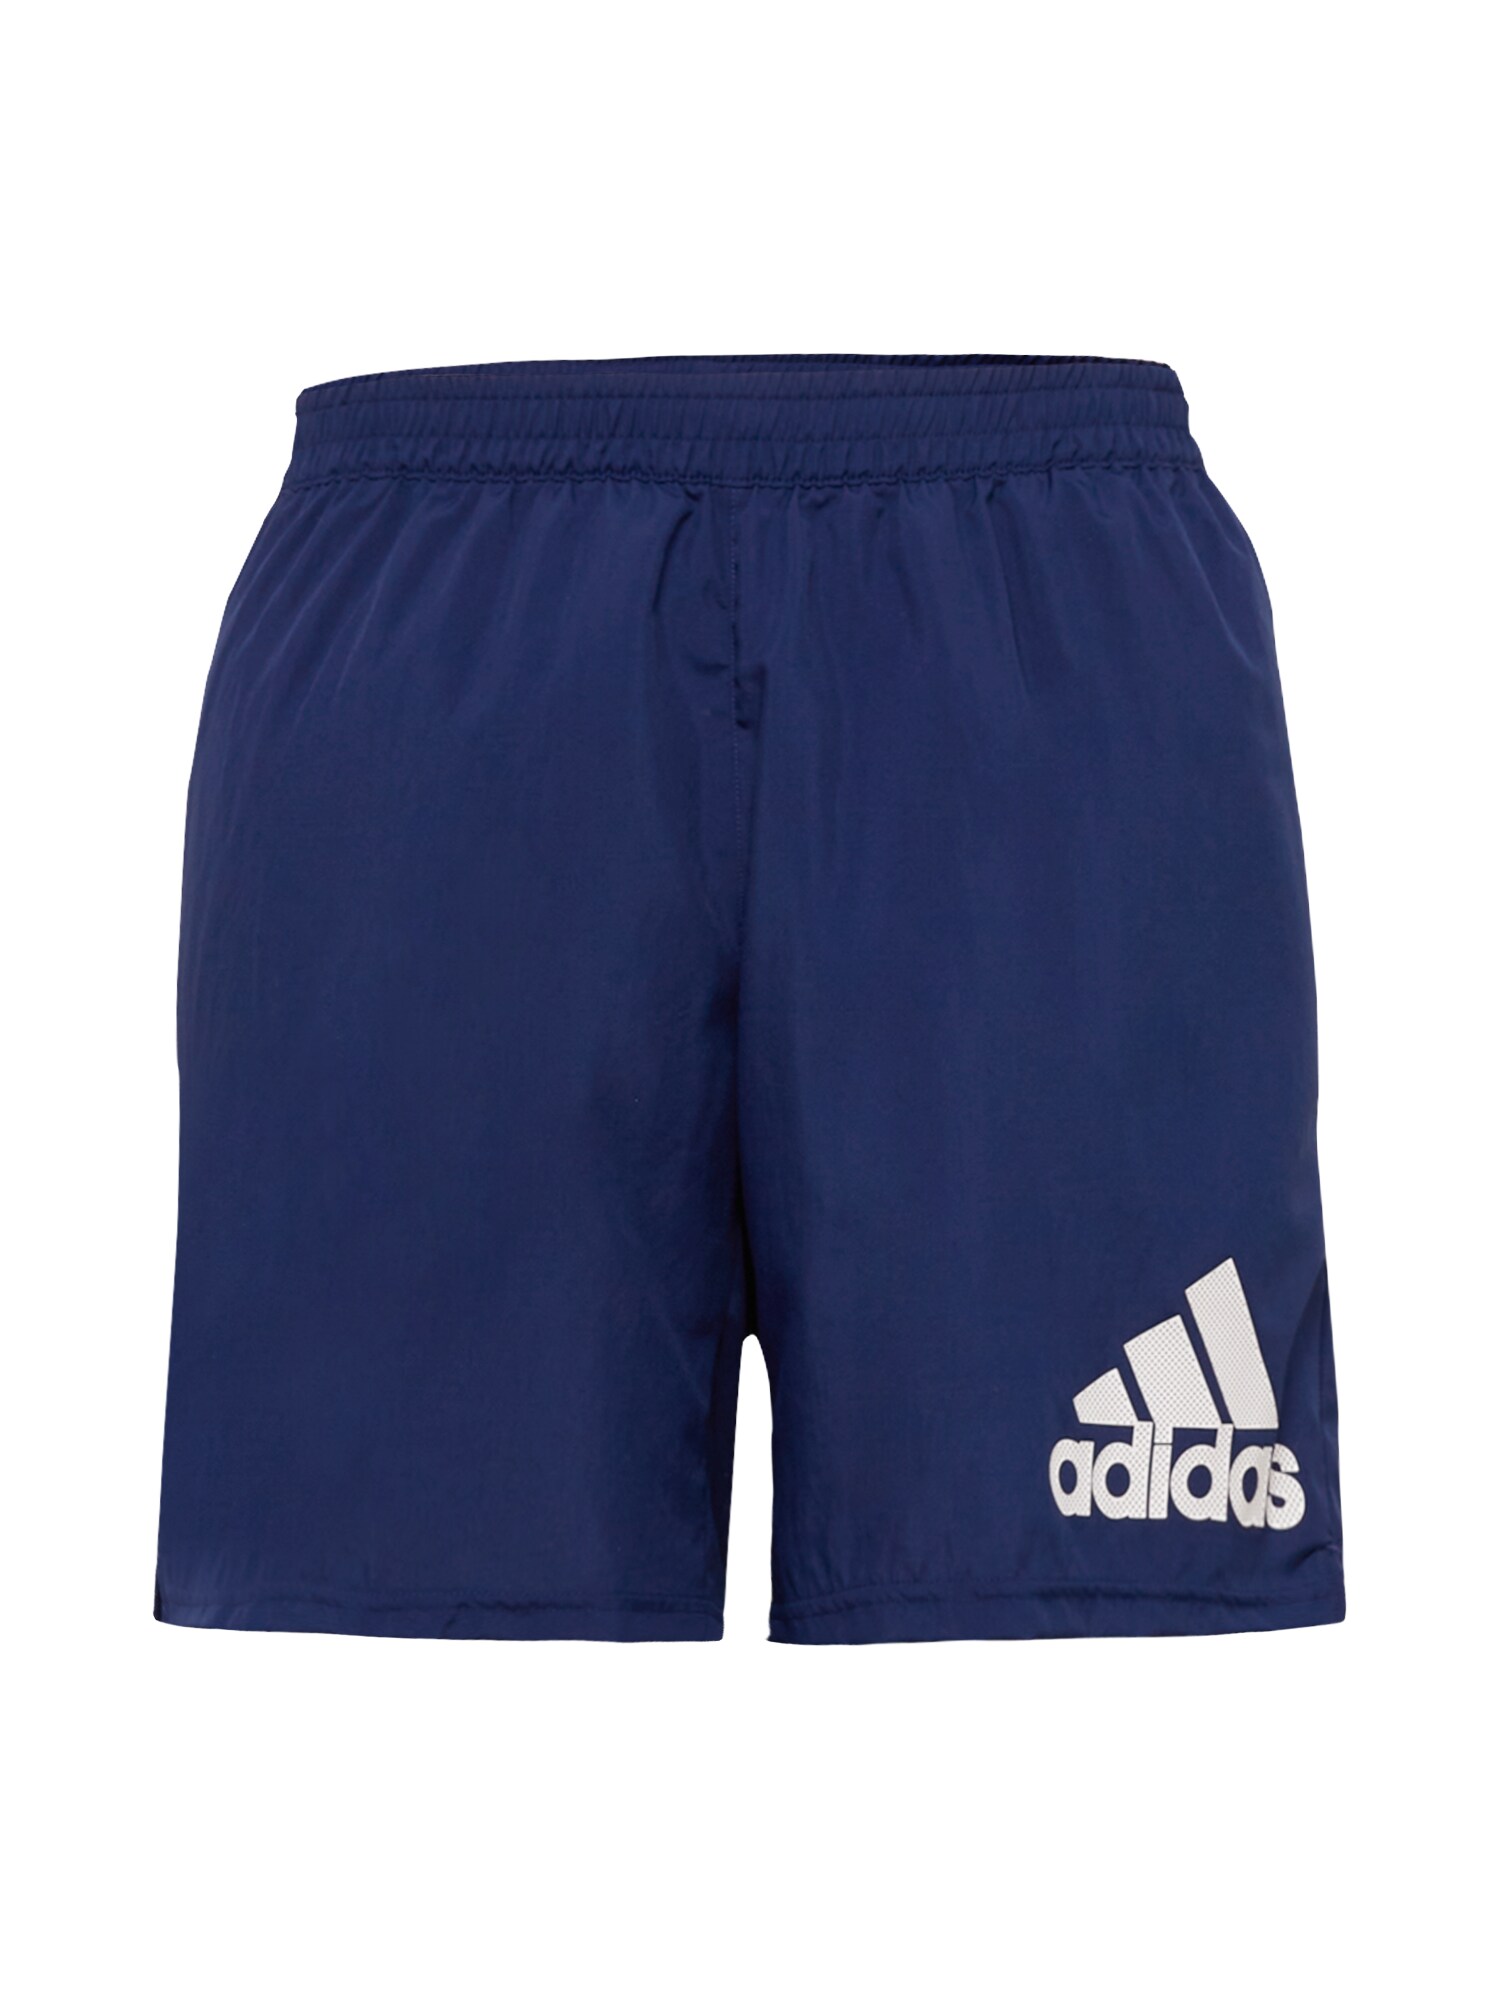 ADIDAS PERFORMANCE Športne hlače 'Run It'  kobalt modra / bela